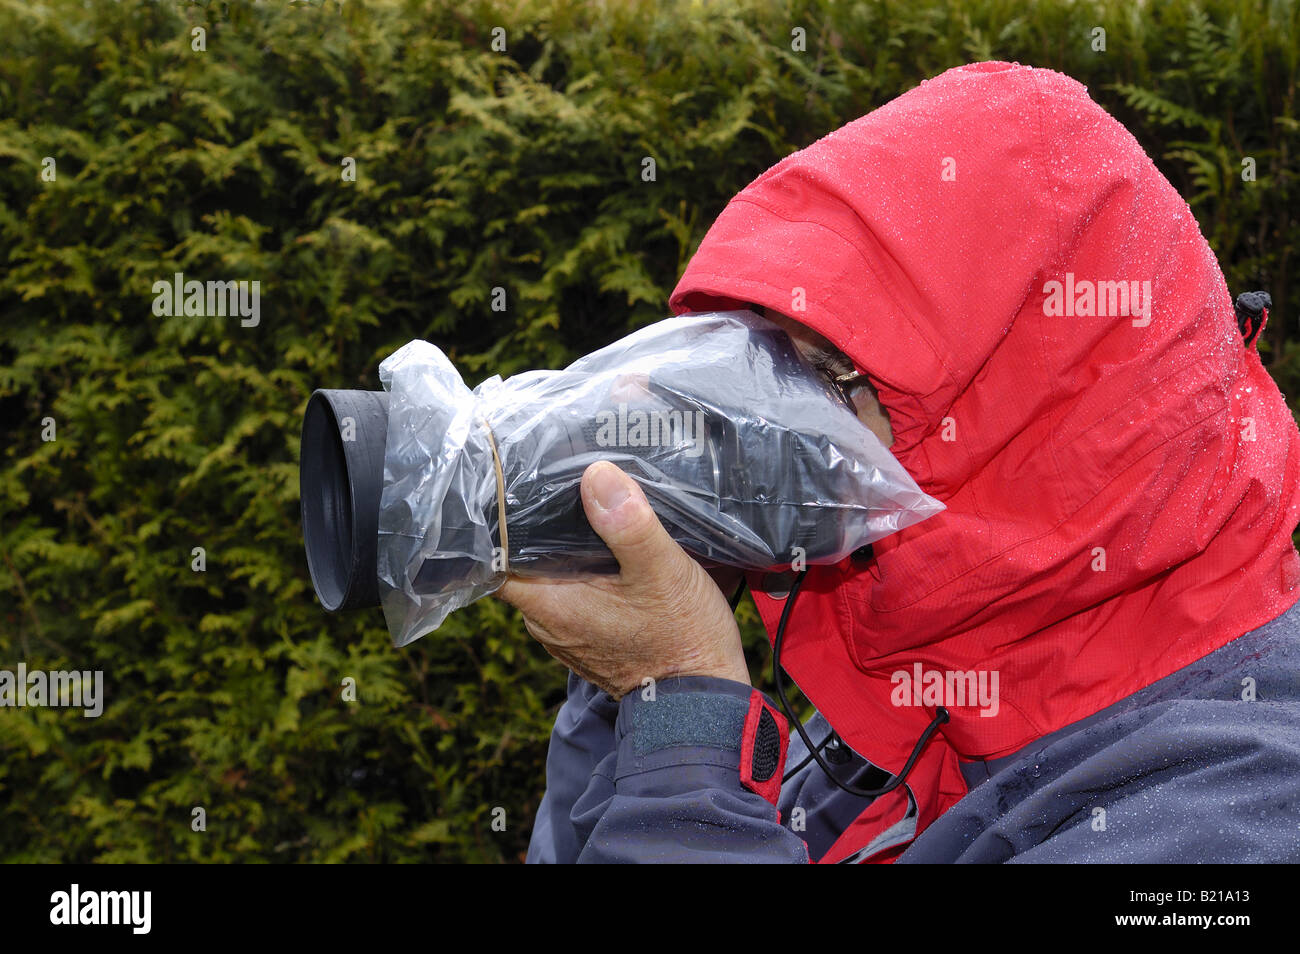 713 Camera Rain Cover Images, Stock Photos & Vectors | Shutterstock